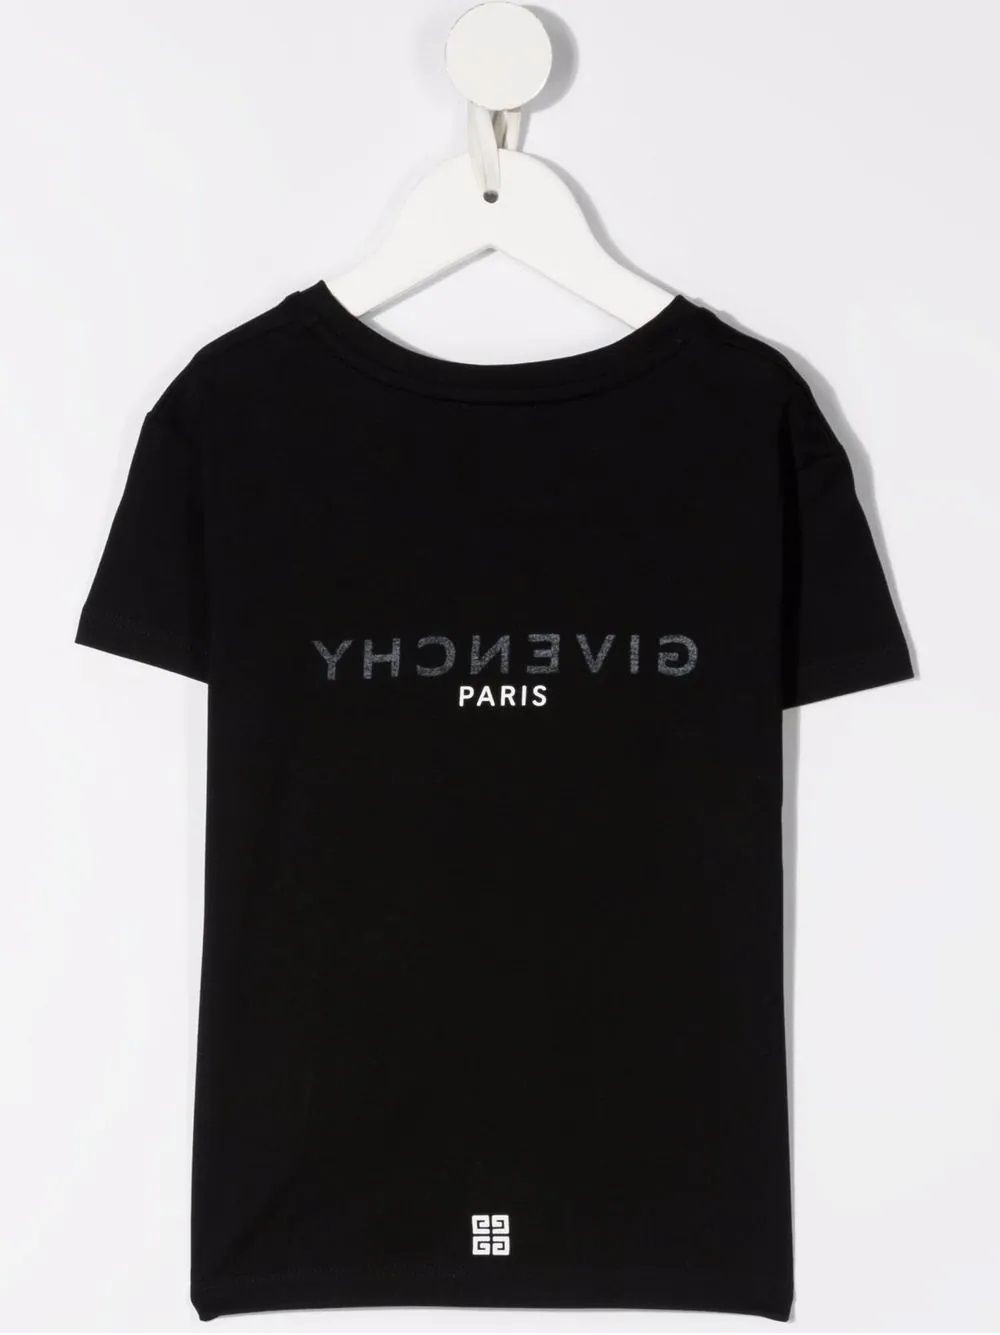 Girls Givenchy Paris Reverse Logo T-Shirt Black